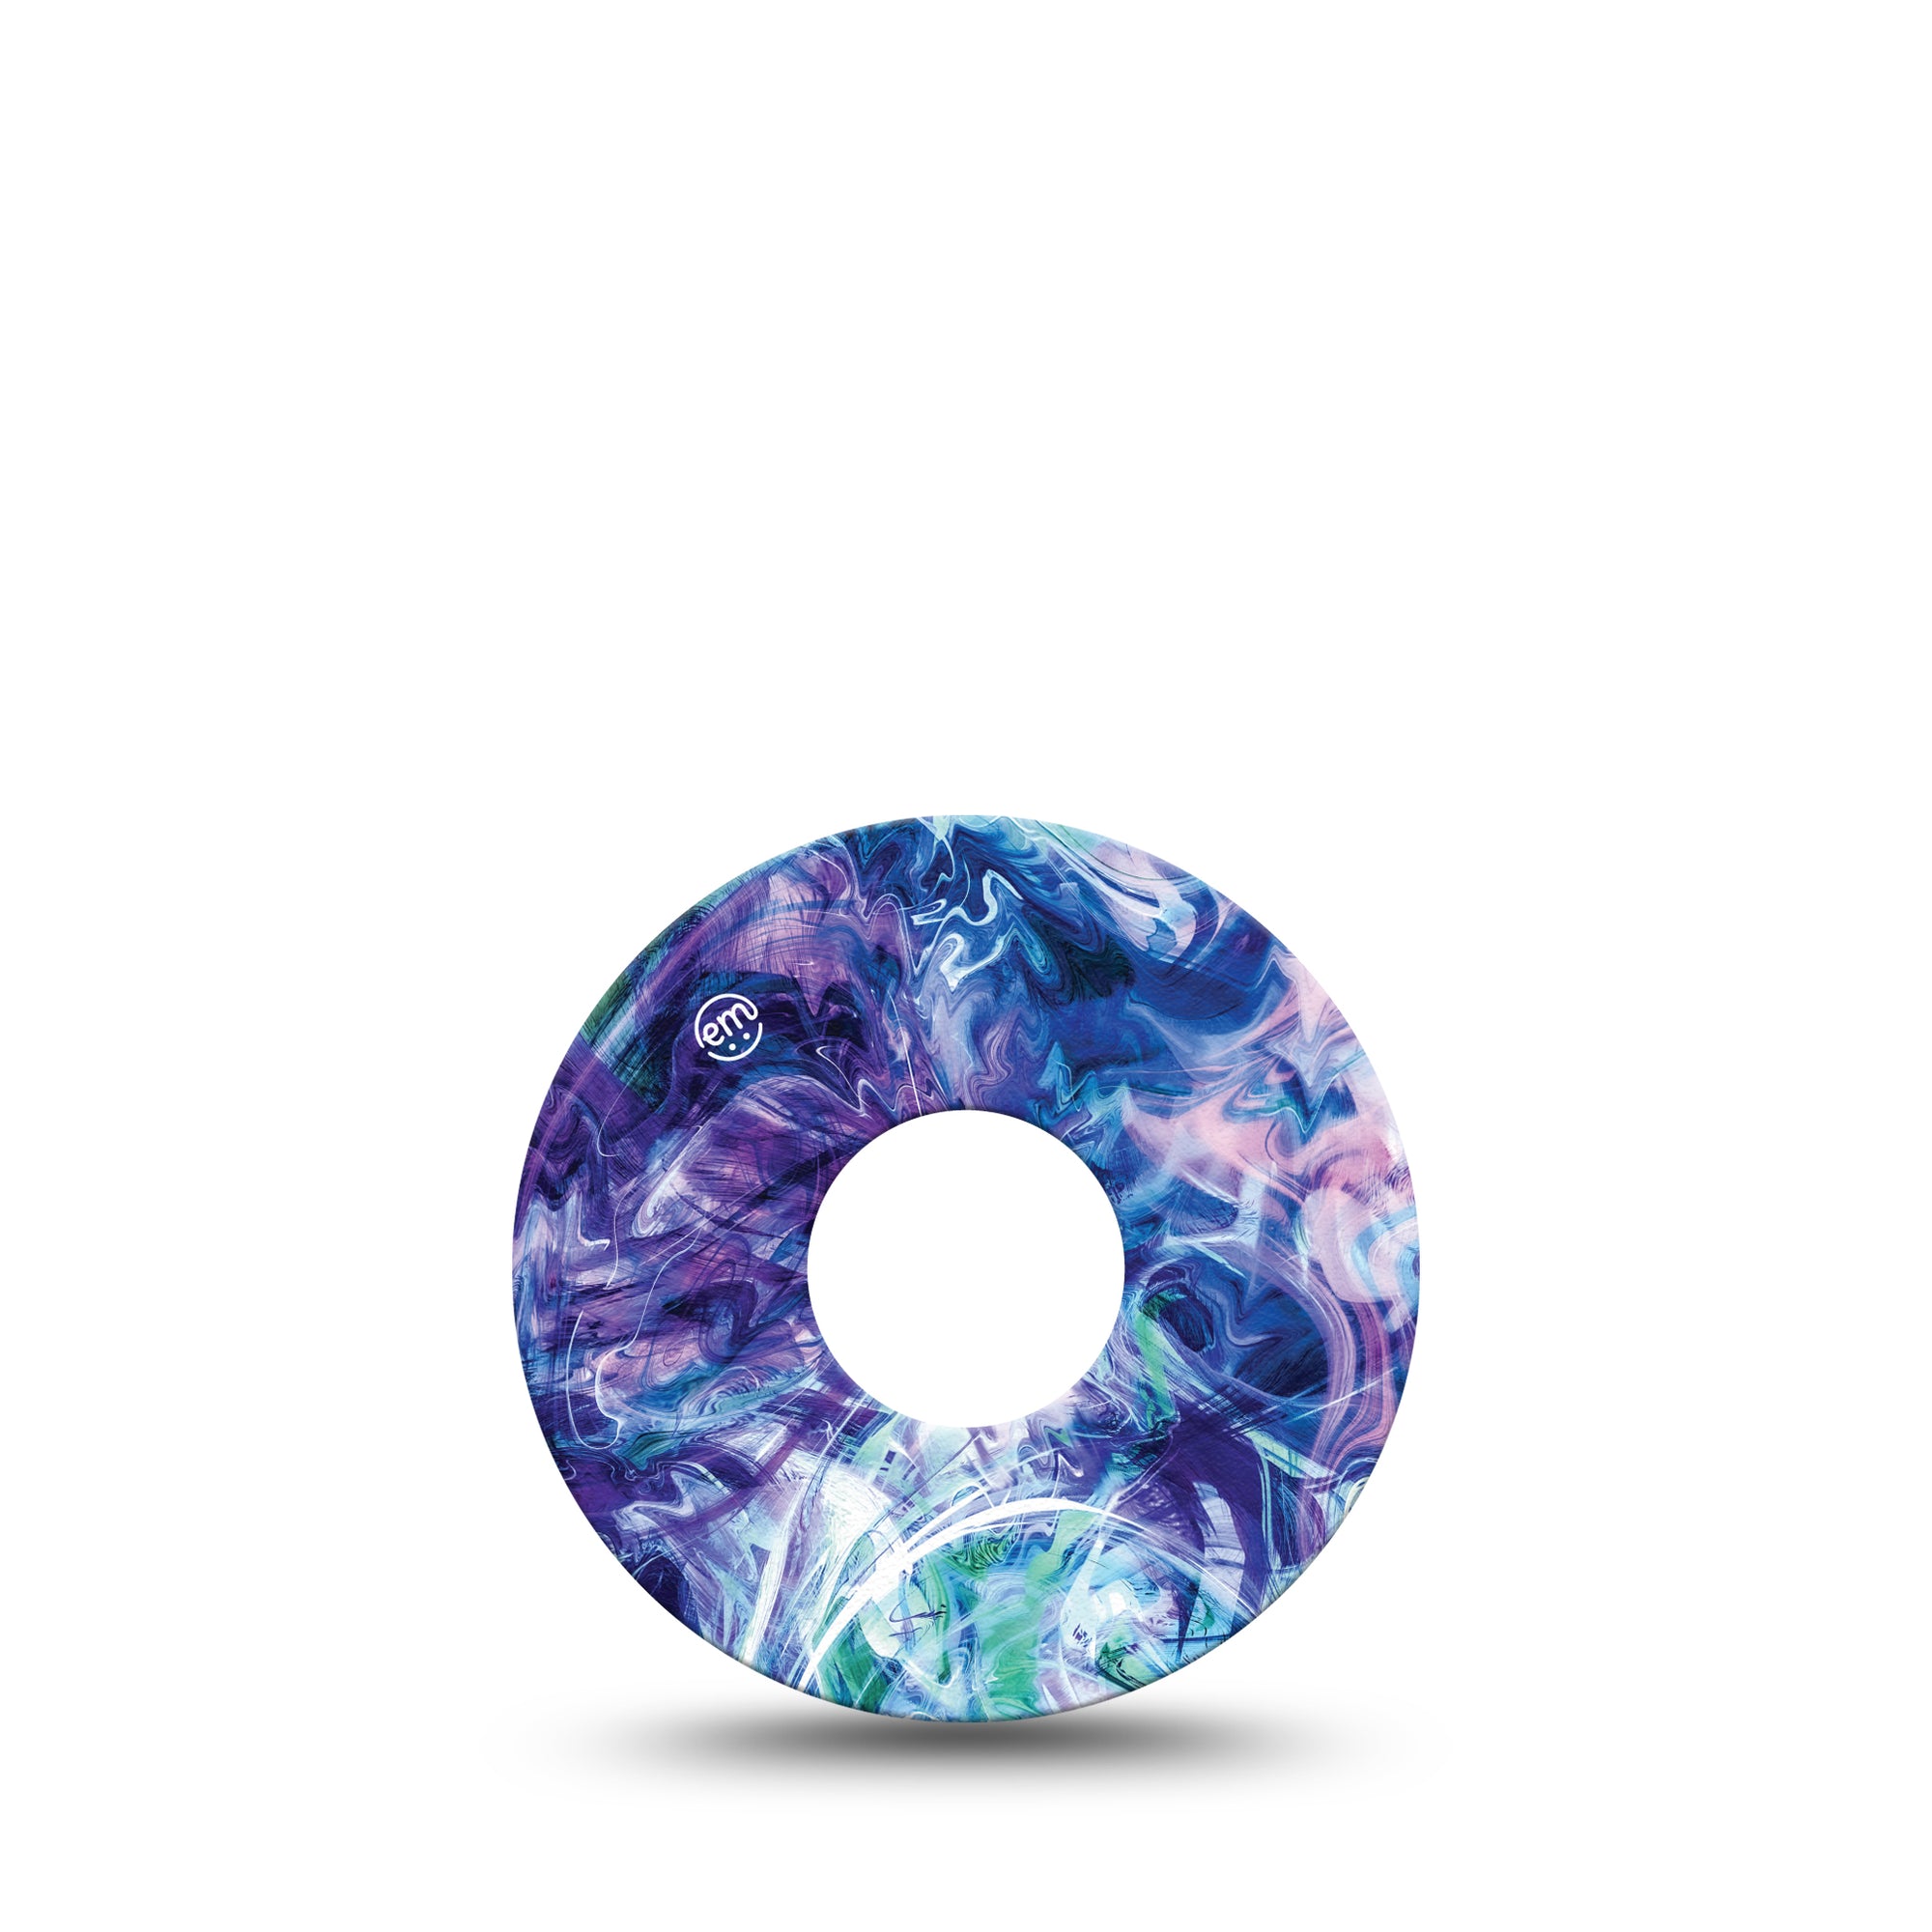 Deep Purple Swirl Libre 3 Tape, Single, TieDye Themed, CGM Fixing Ring Patch Design